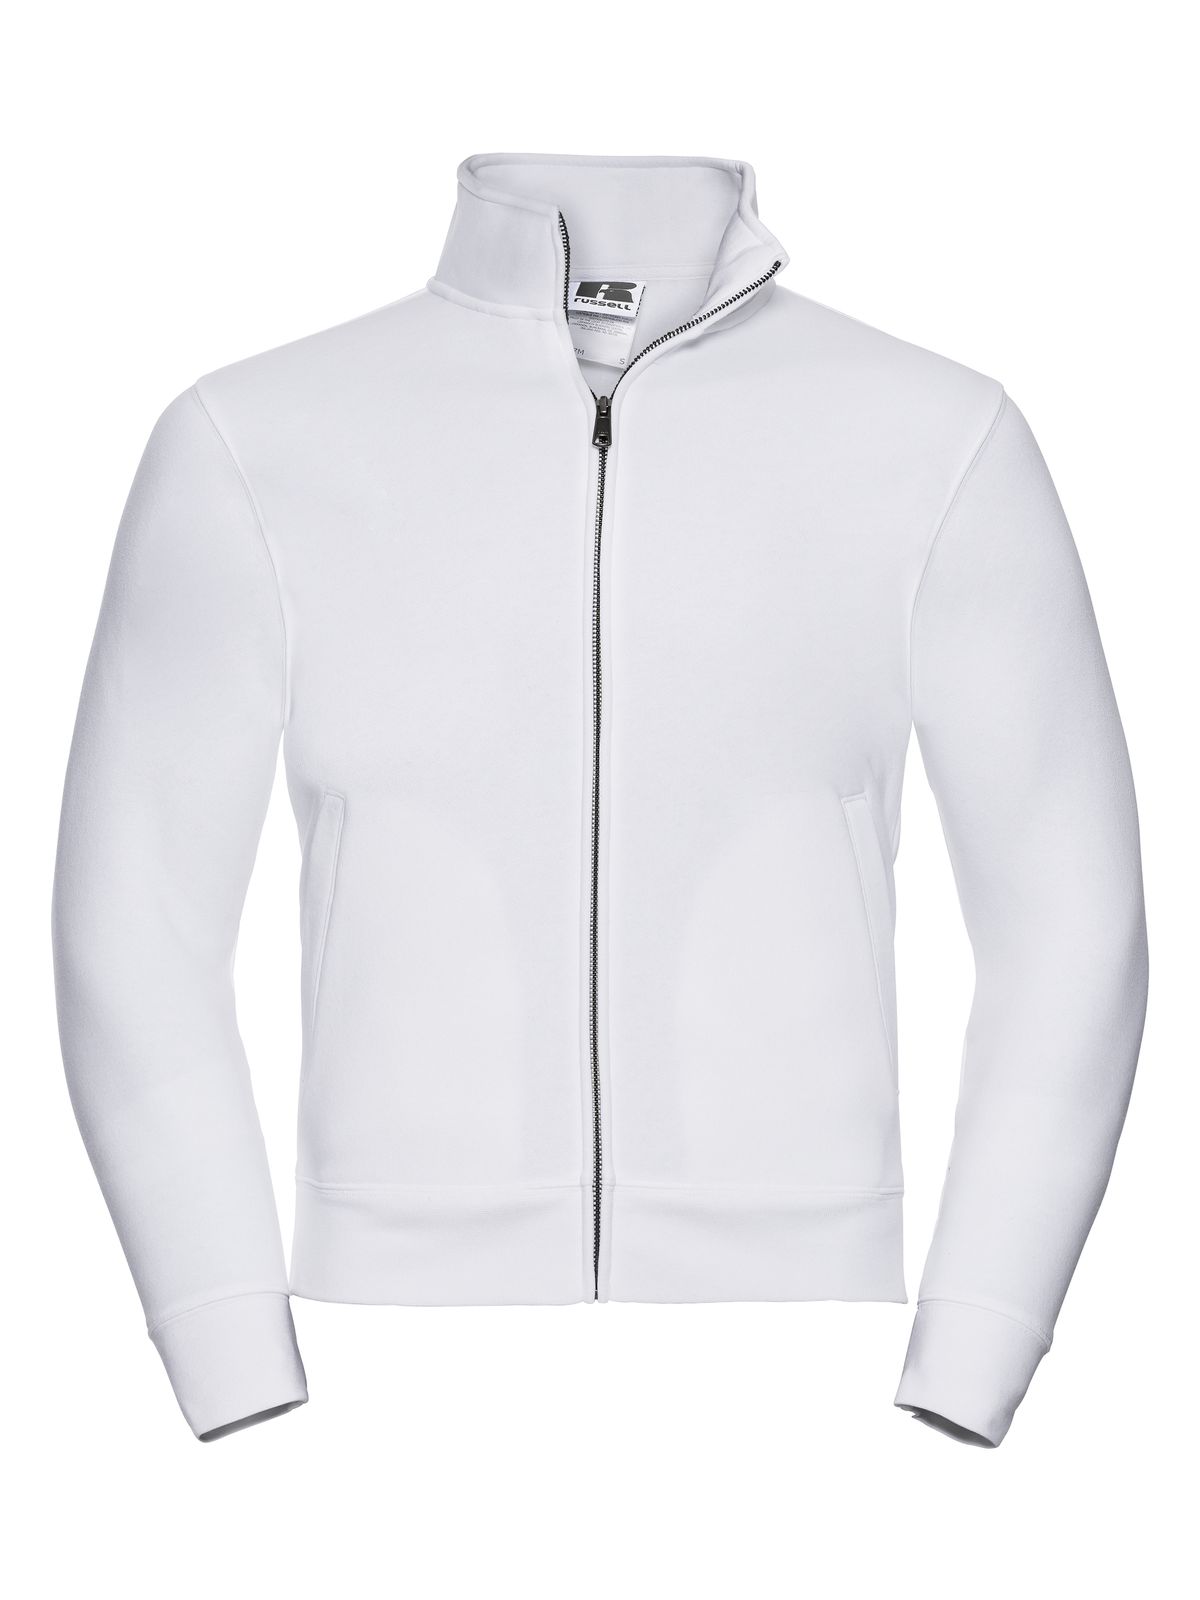 mens-authentic-sweat-jacket-white.webp